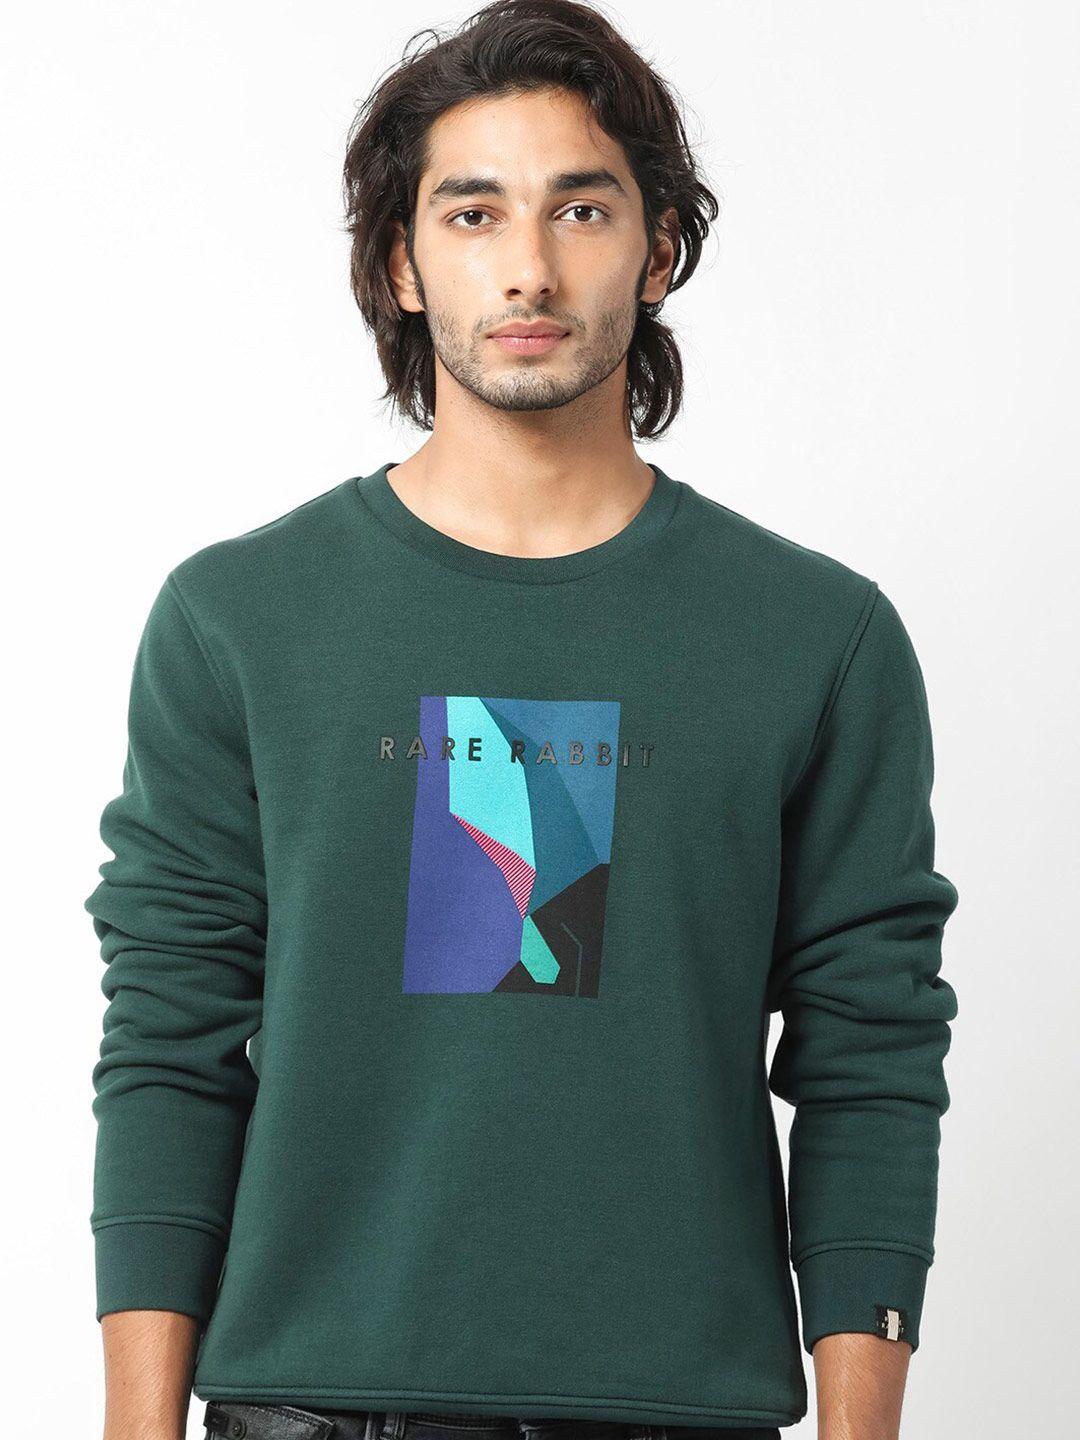 rare rabbit graphic printed cotton sweatshirt